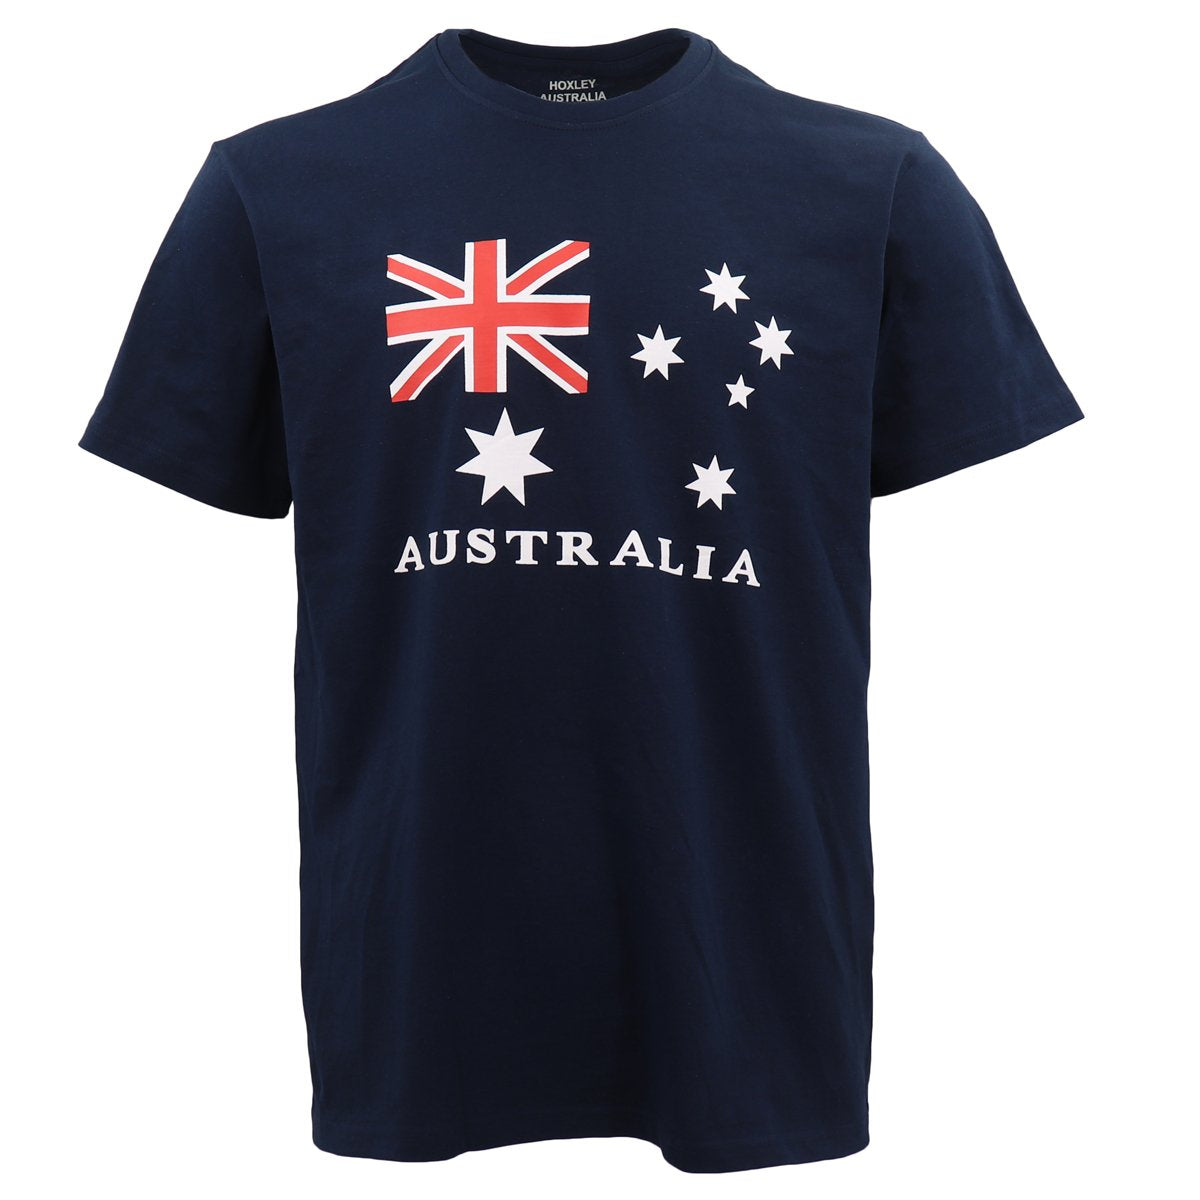 Unisex Kids Adults Mens Australian Day Aussie Flag Navy Souvenir Tee Top T Shirt - Zmart Australia